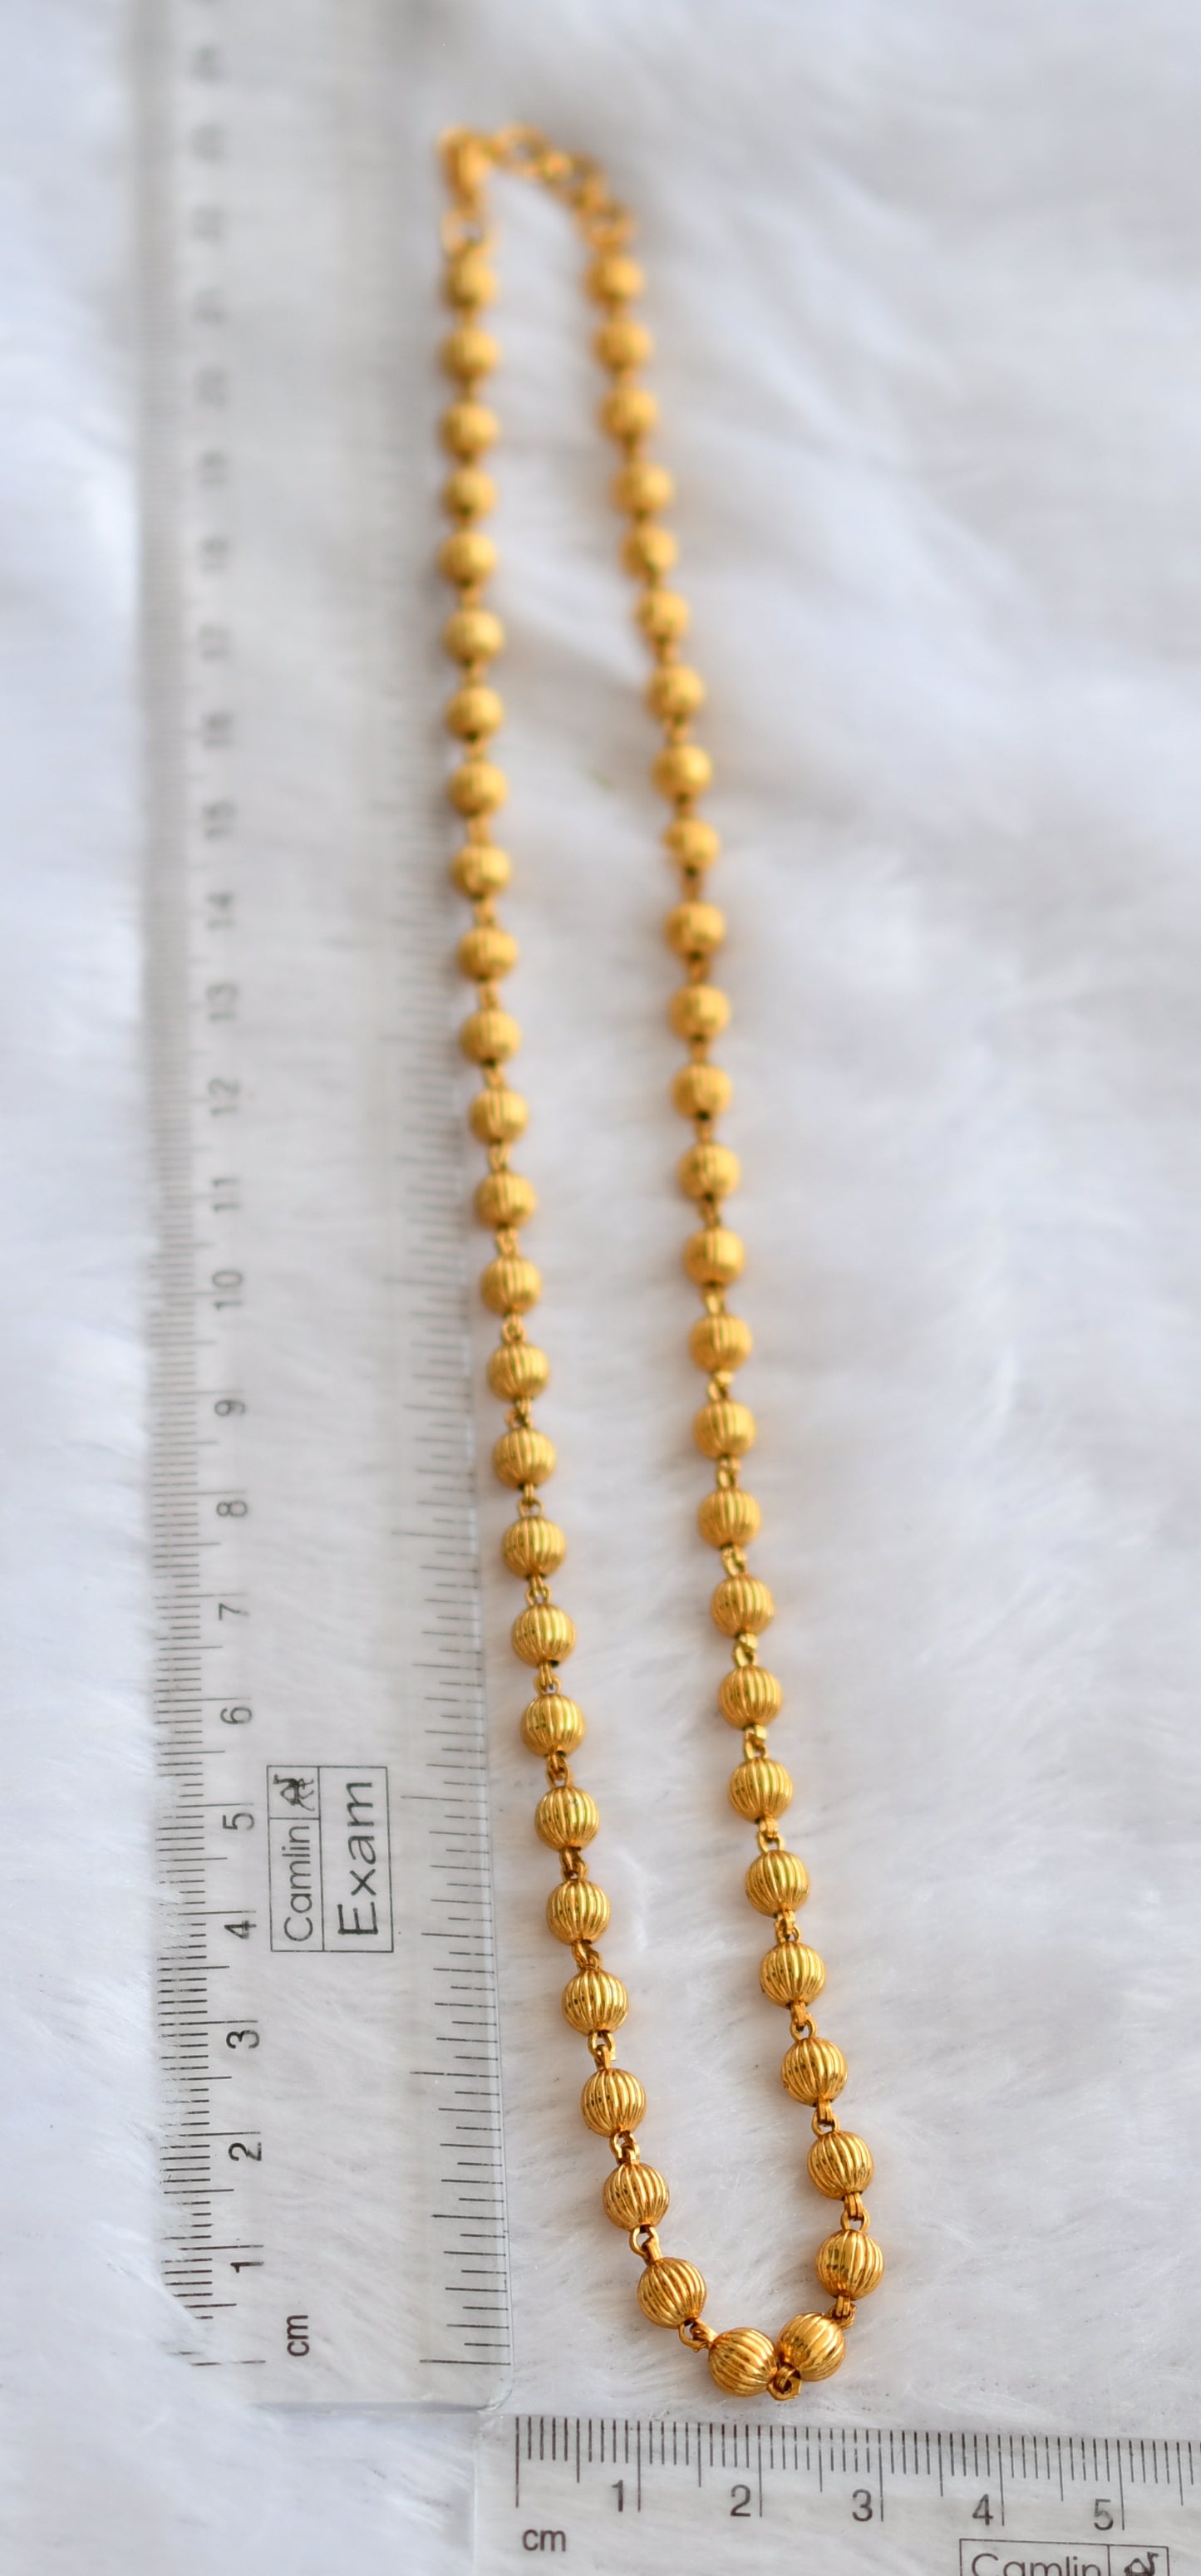 Antique gold tone 18 inches ball chain dj-46102